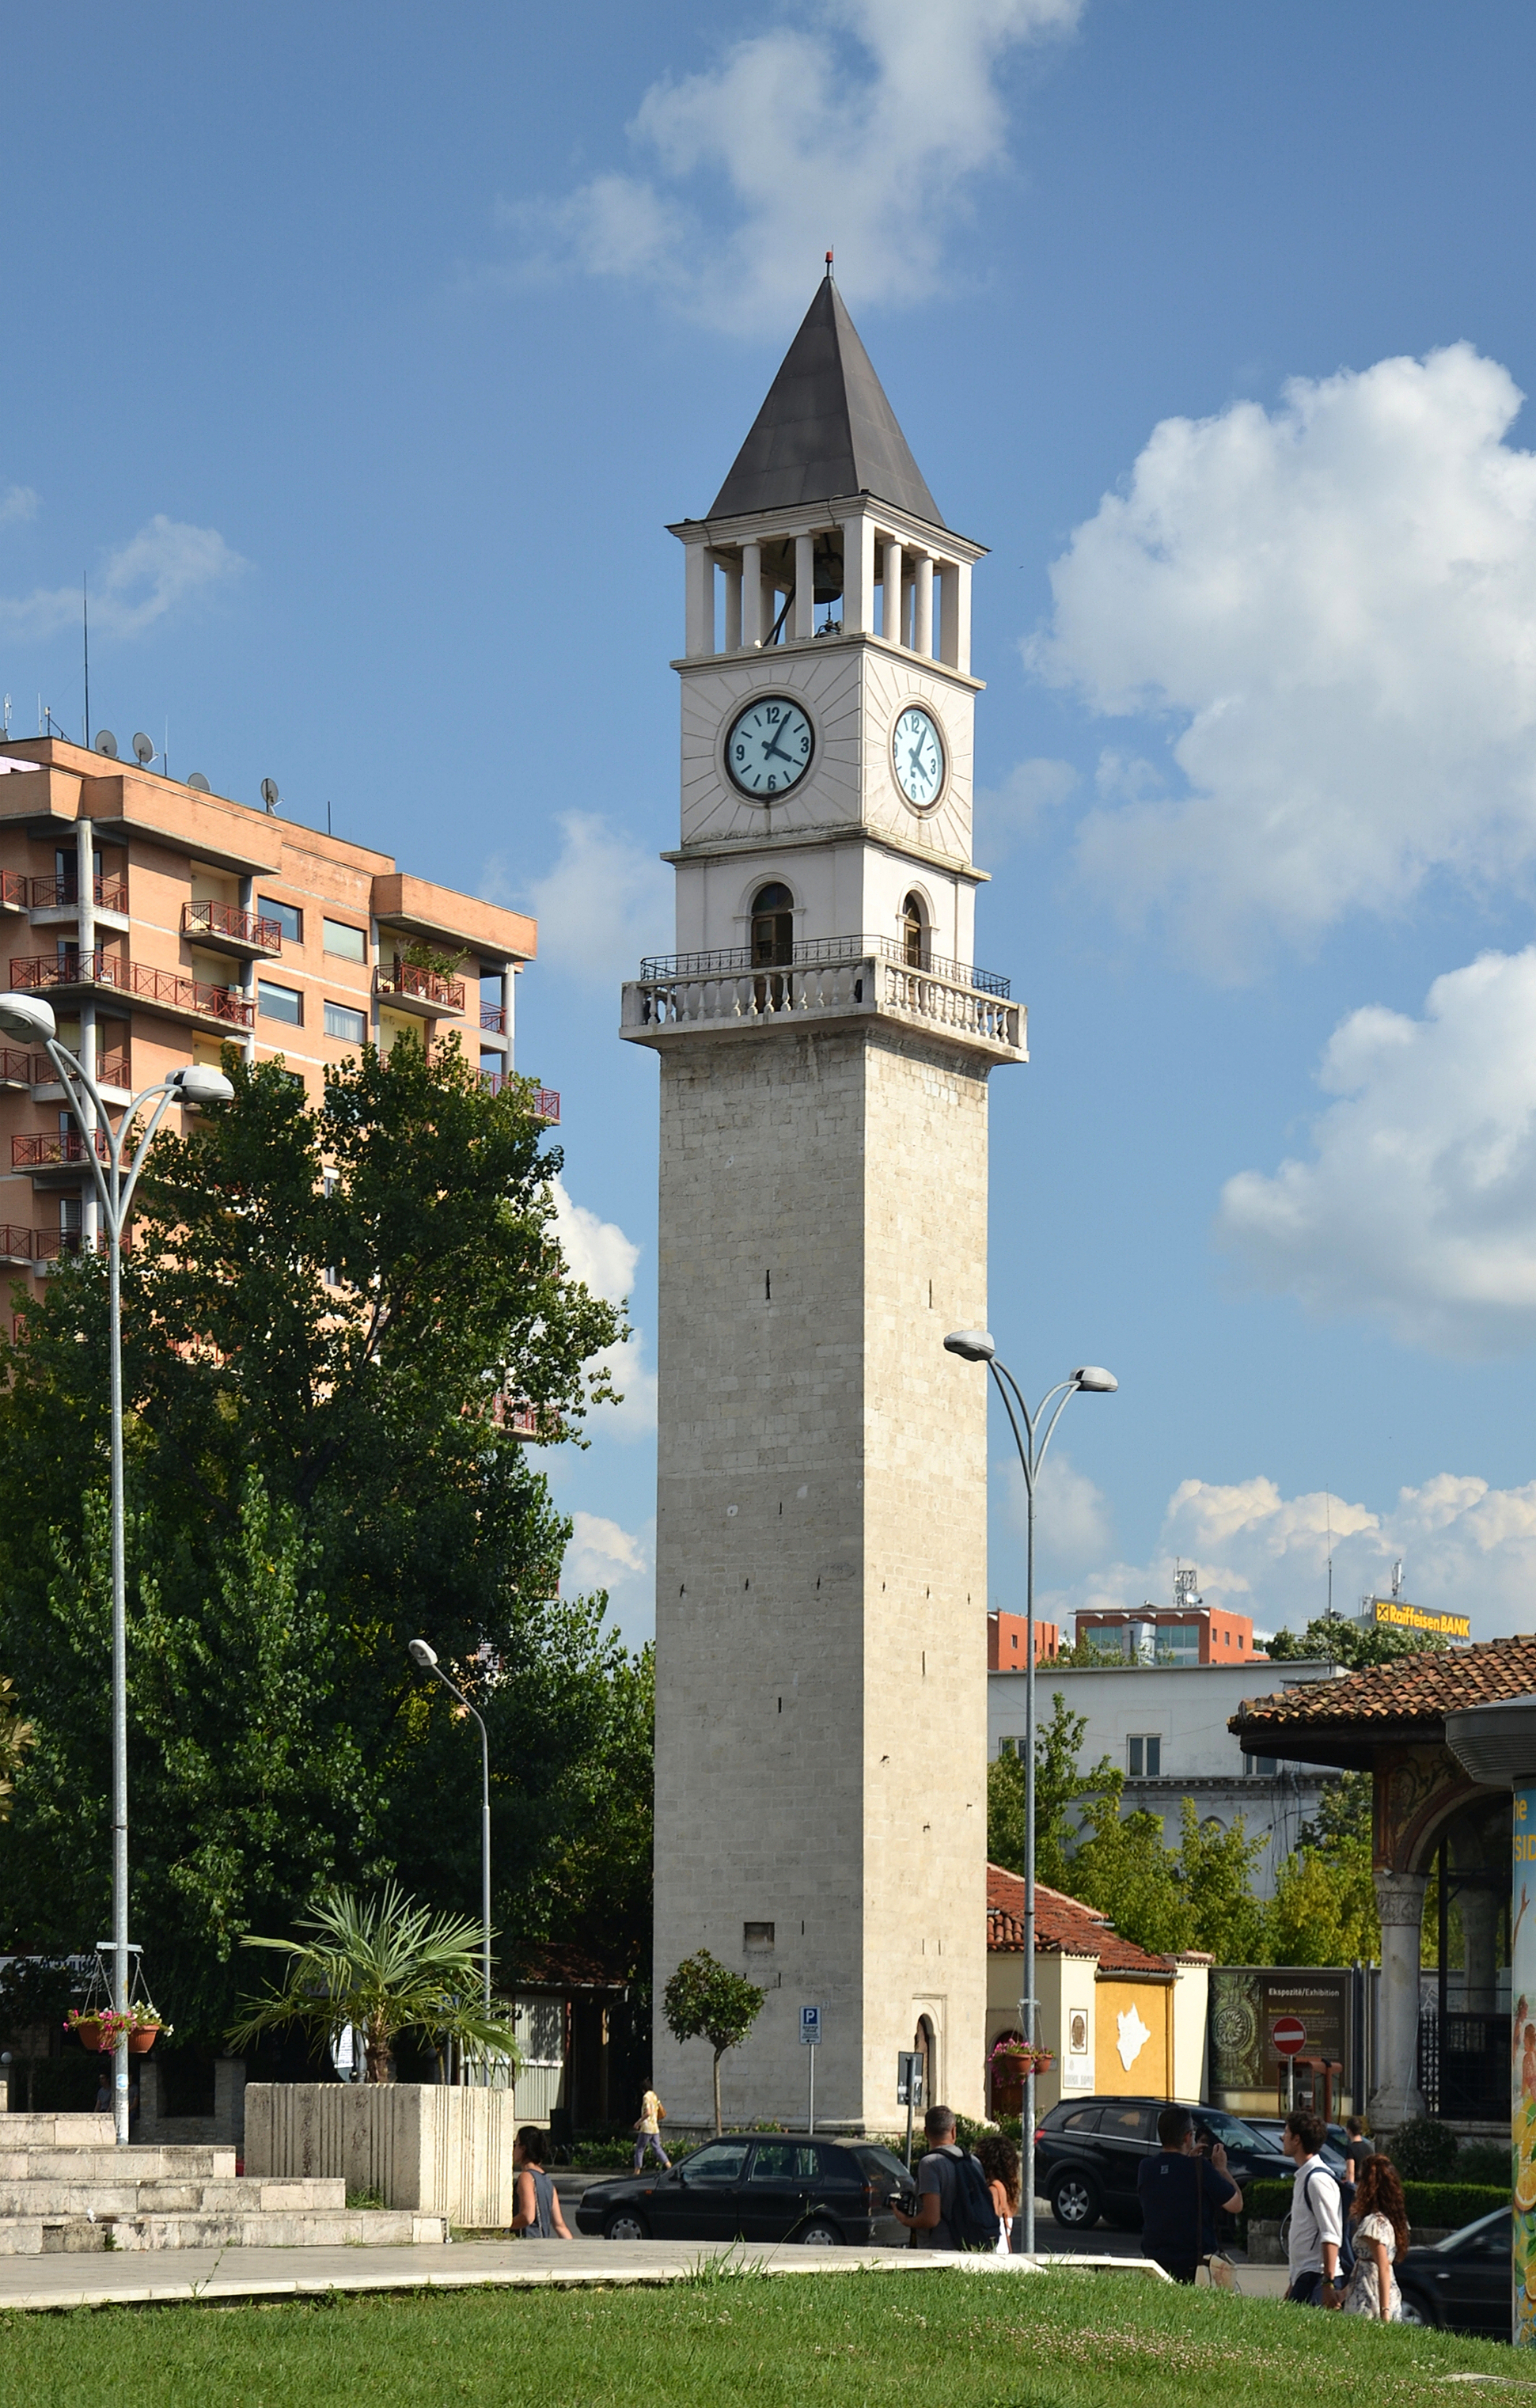 Tirana - Clock Tower (by Pudelek)